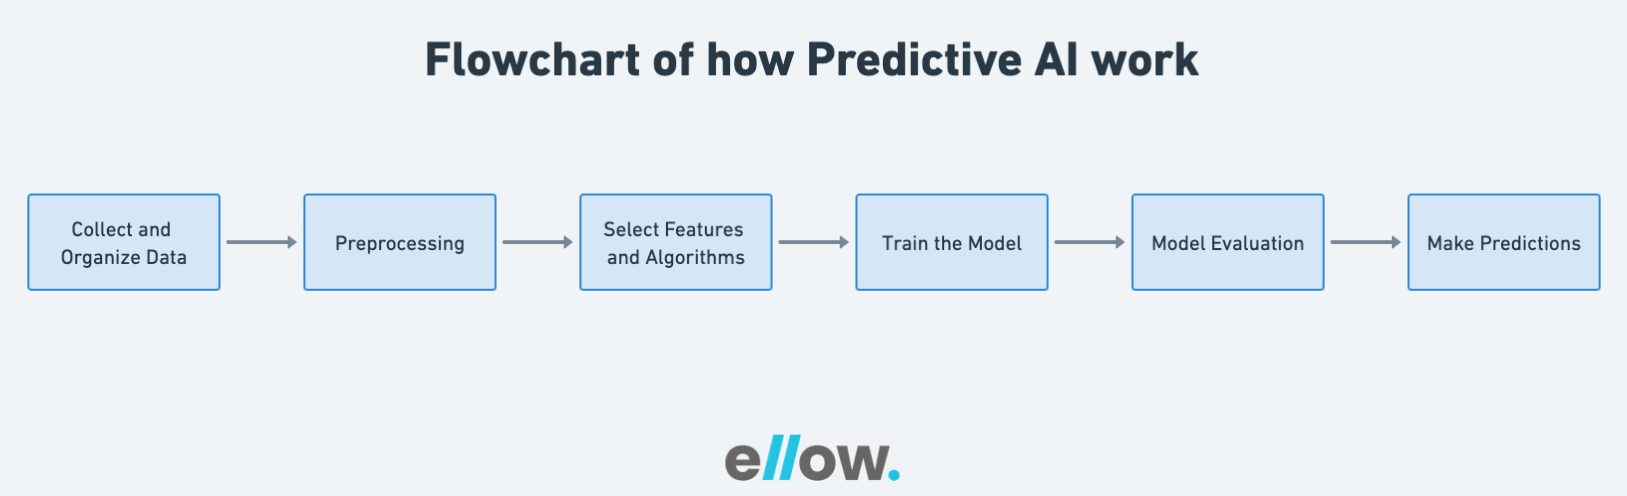 How Predictive AI Works